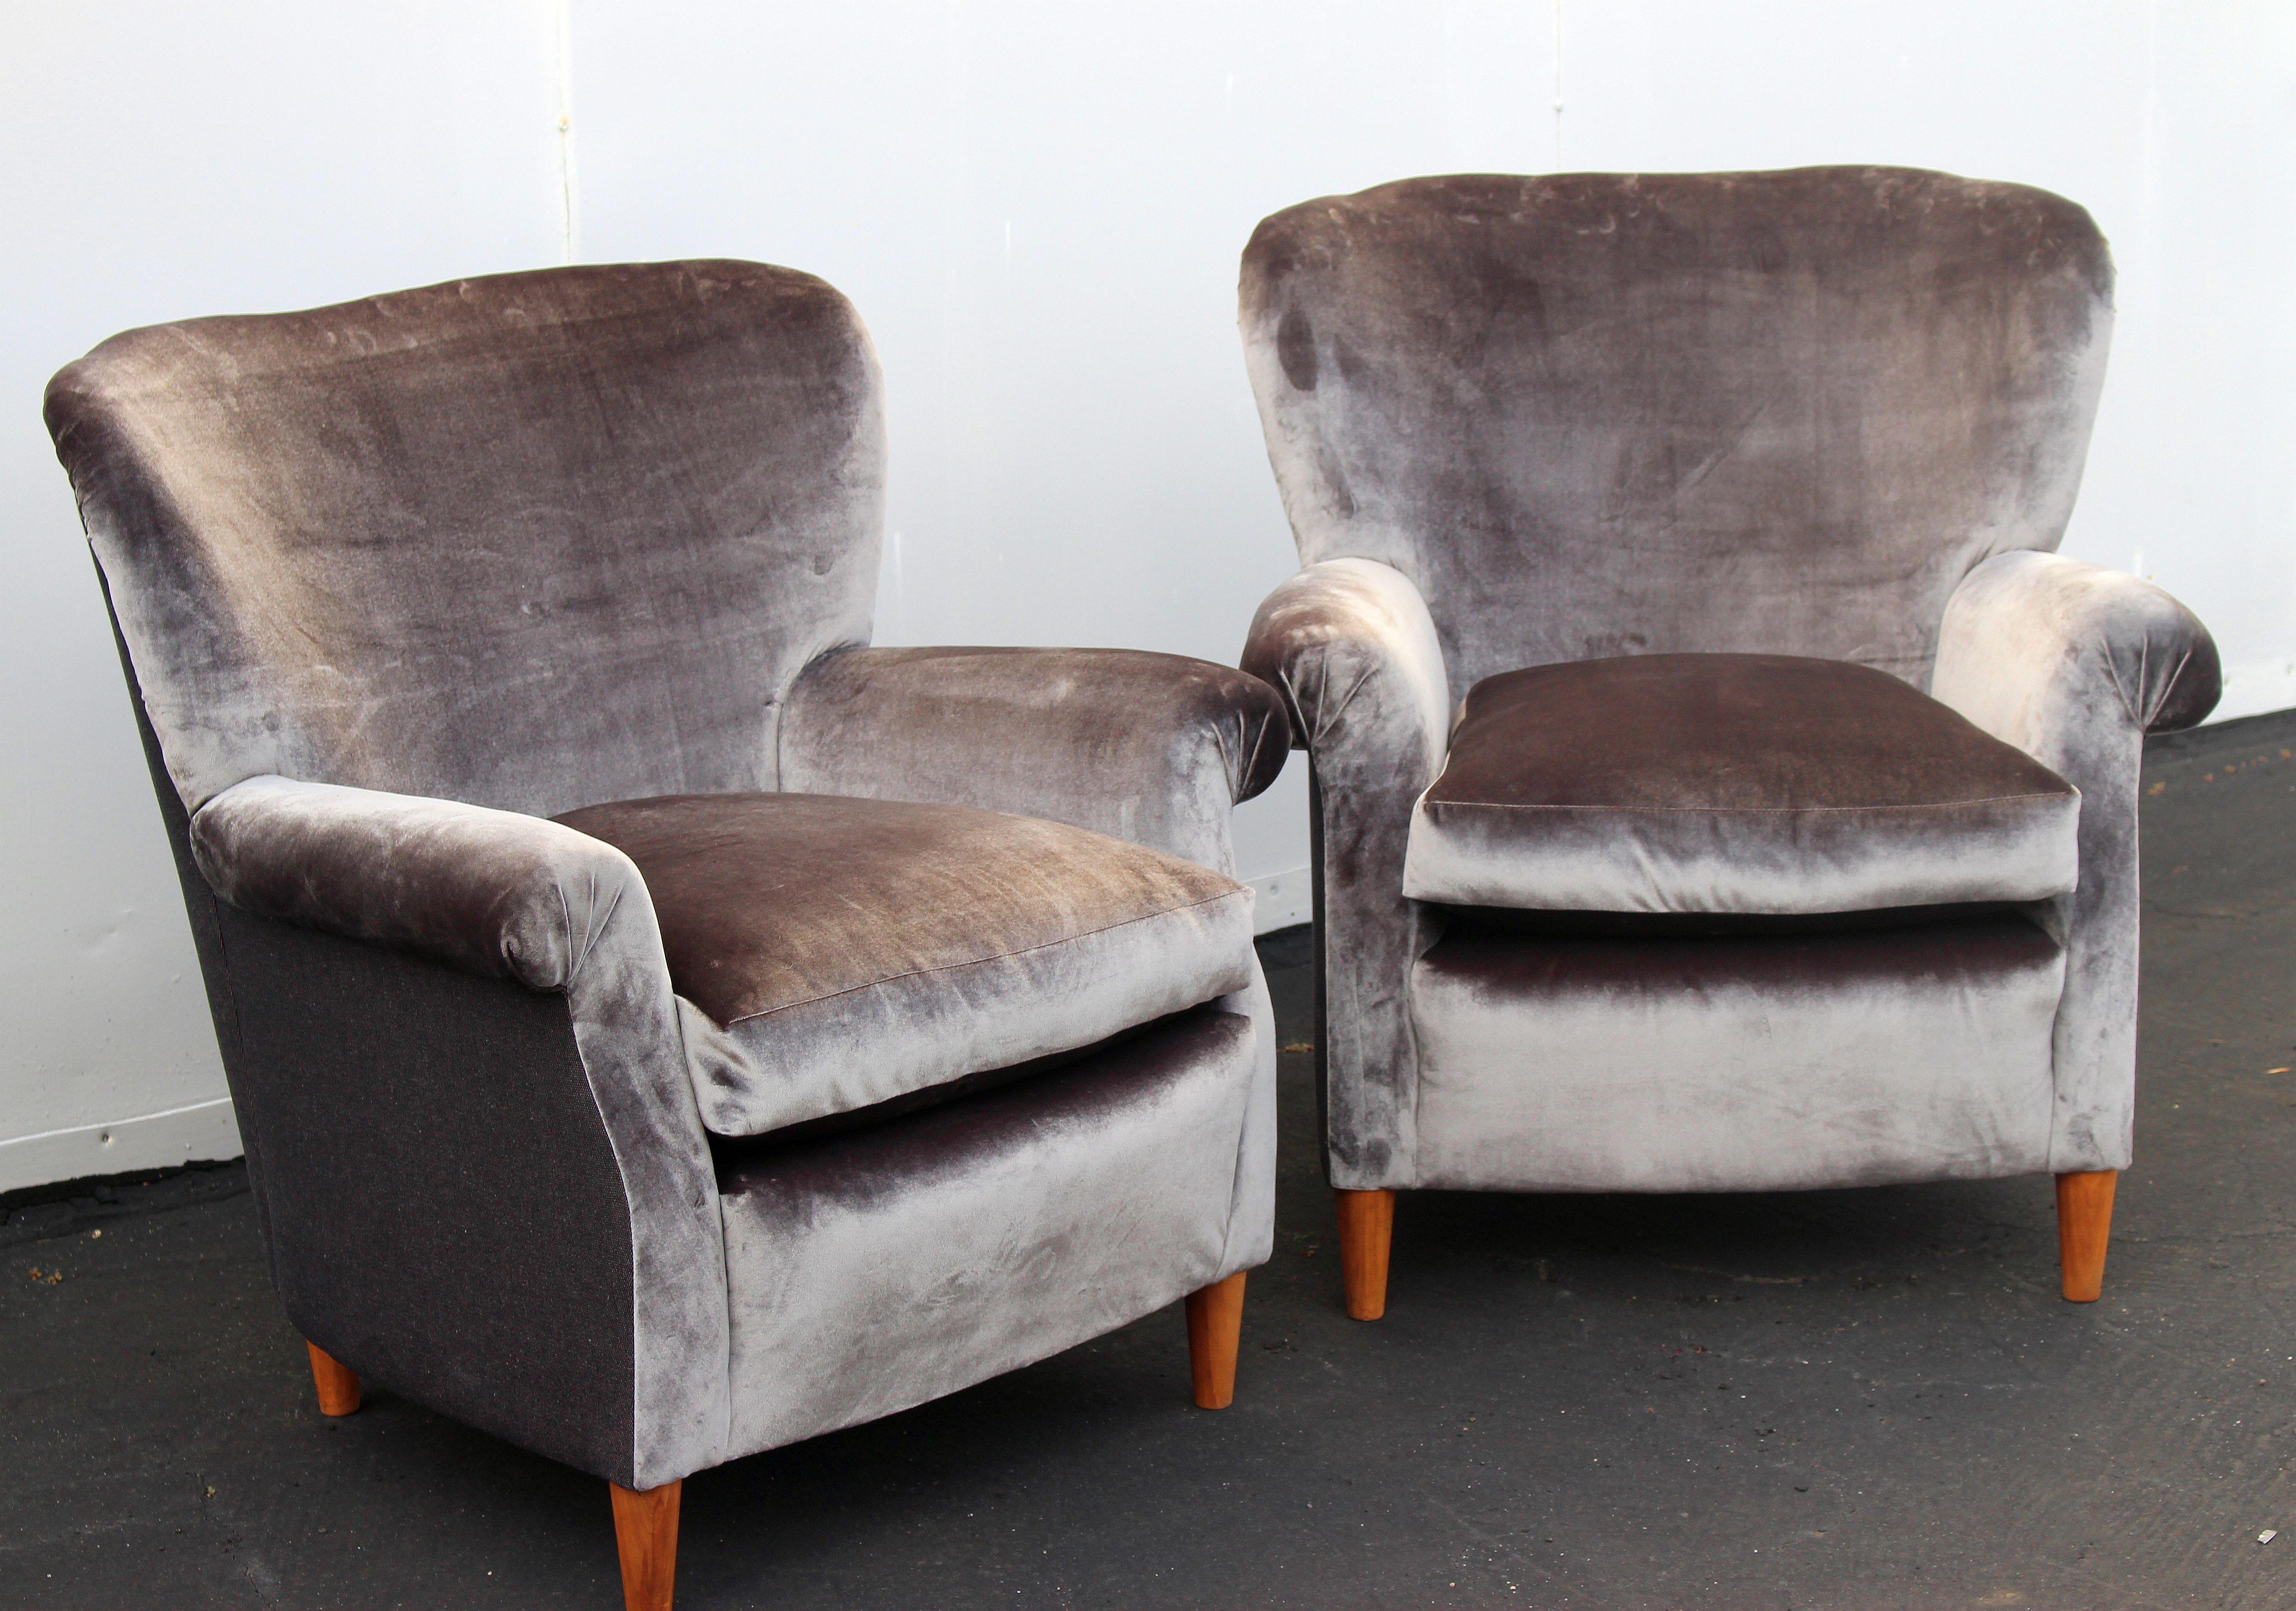 Pair of Italian vintage chairs, new reupholstered in gray velvet.